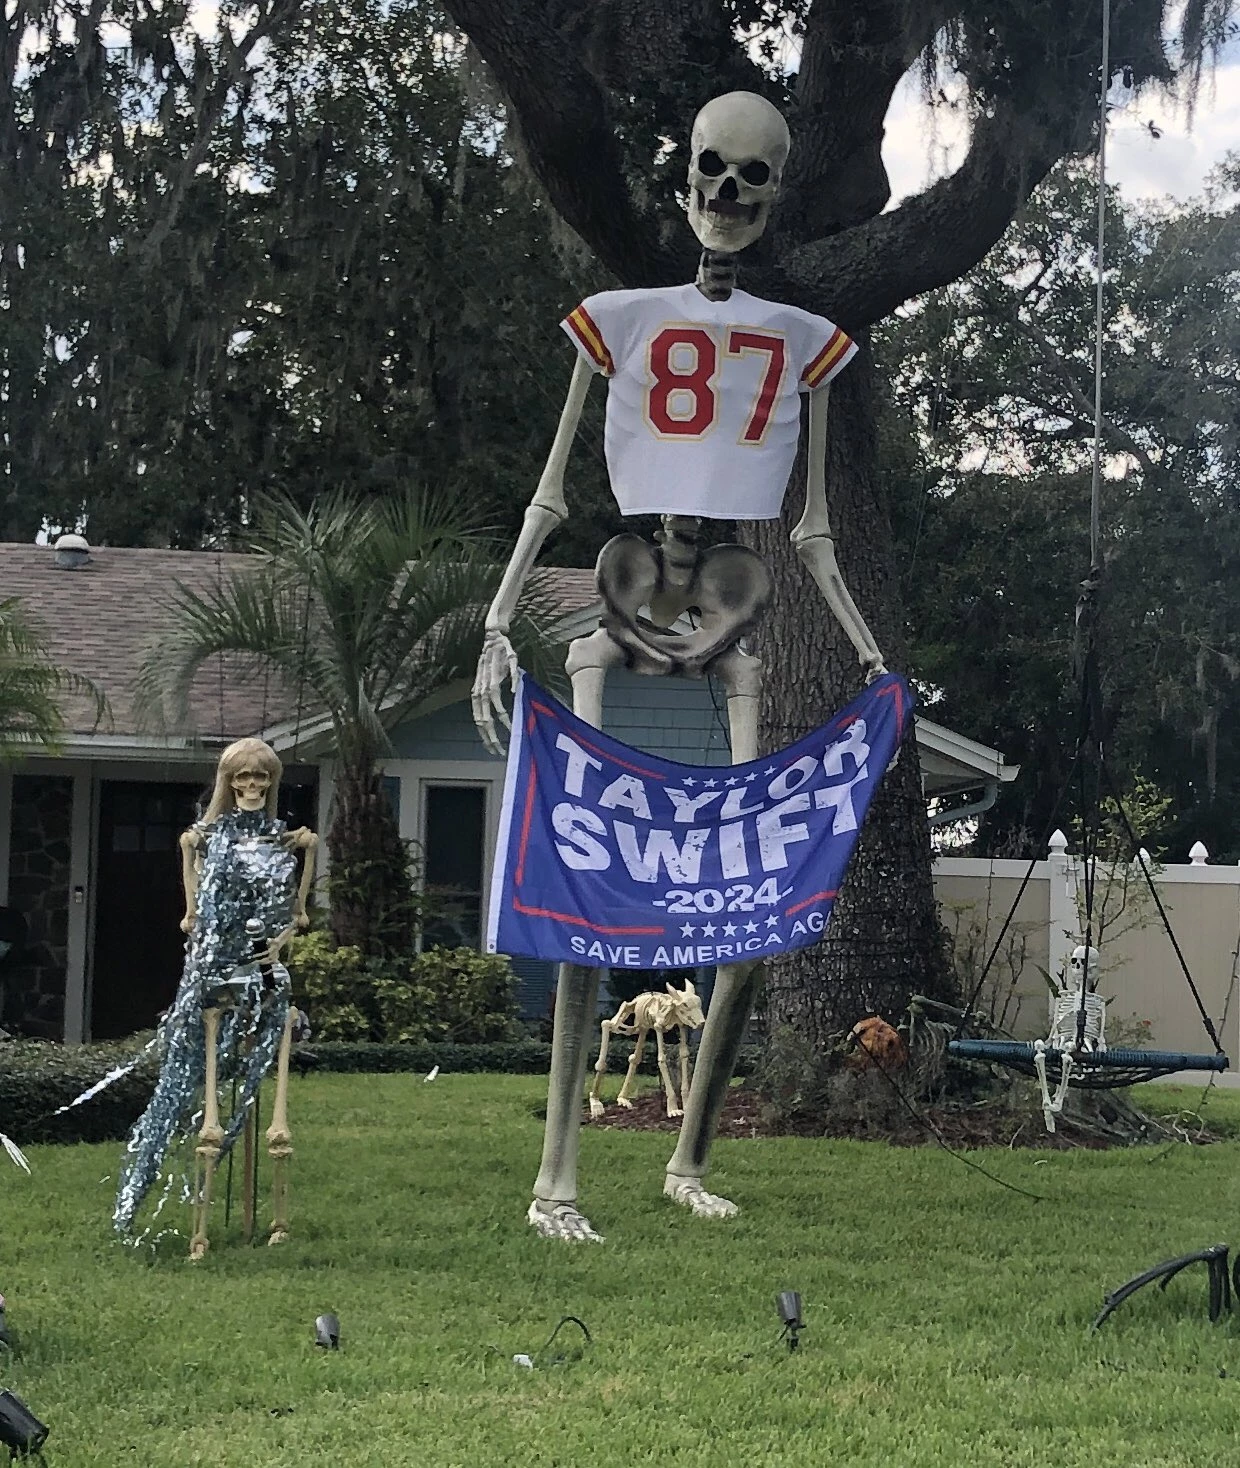 Halloween Is Coming Soon, So This Neighbor Has A Nice Idea